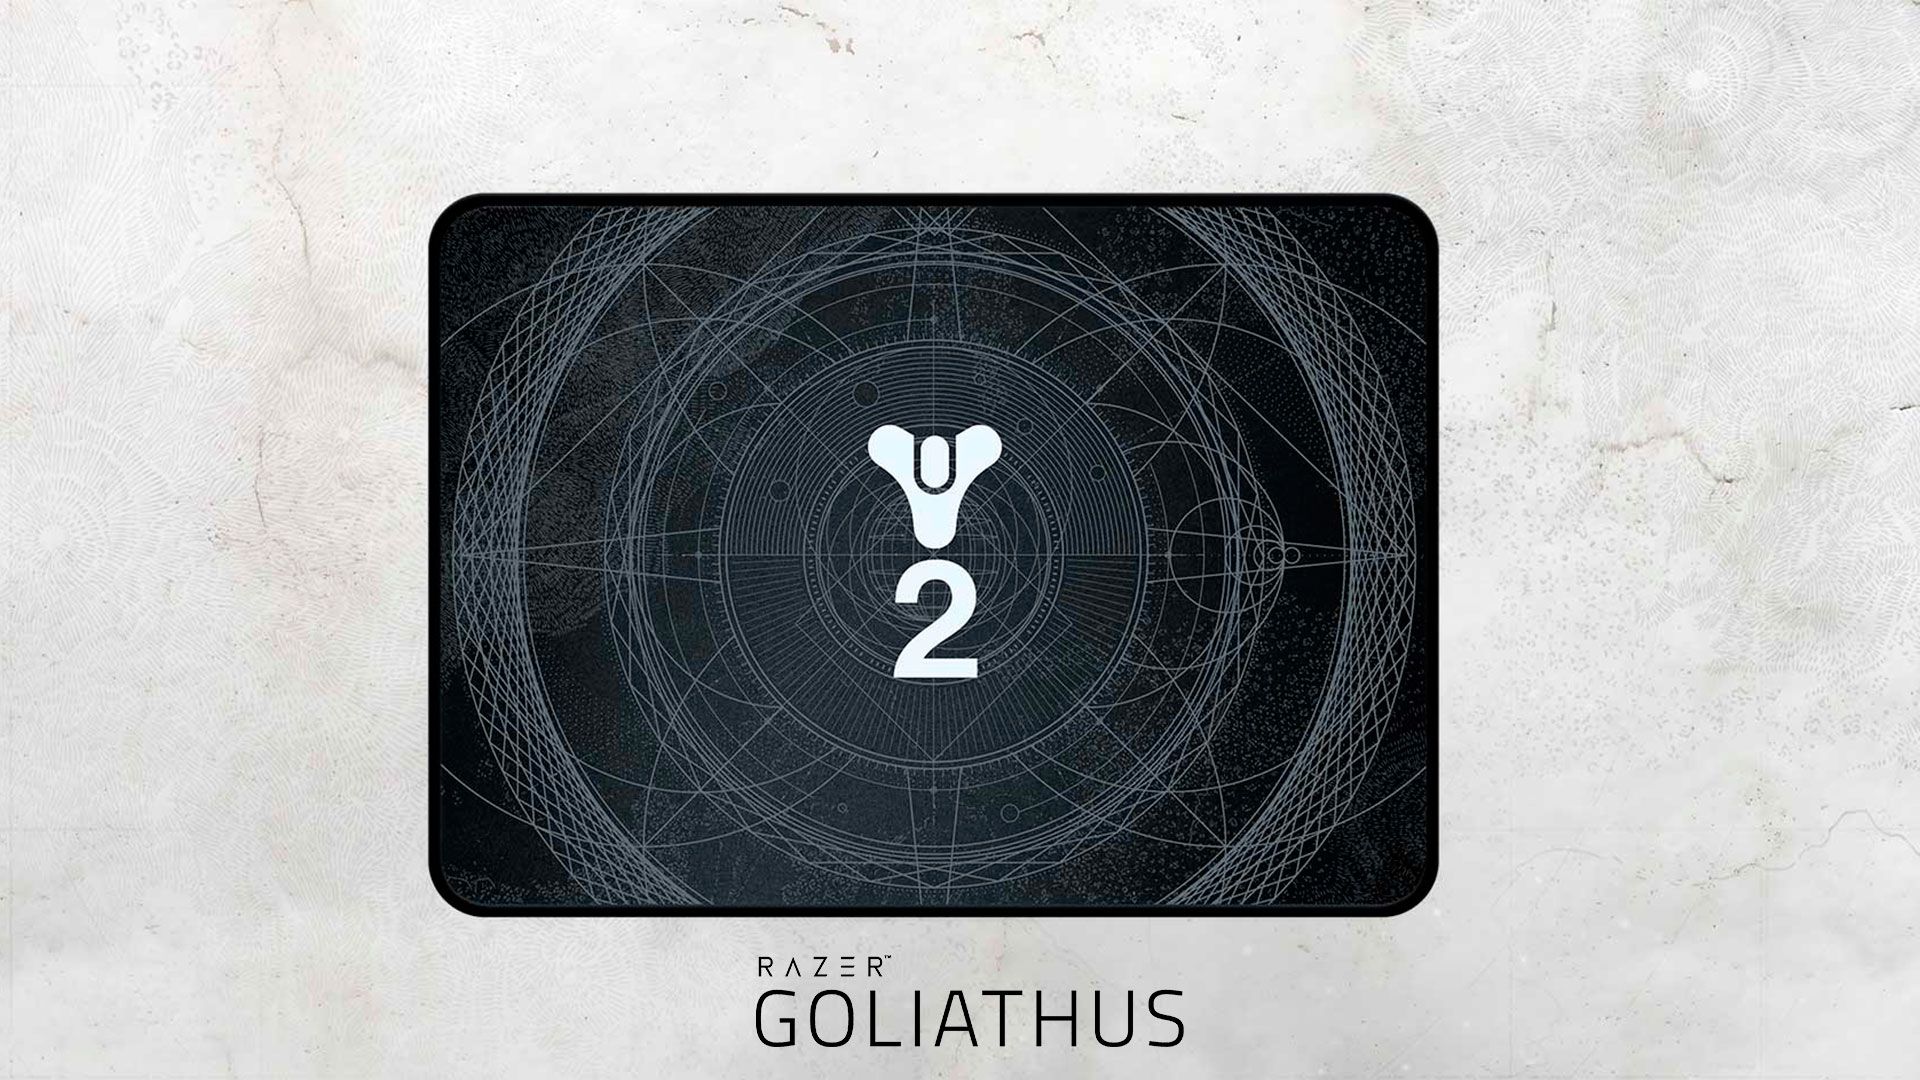 Destiny 2 Razer Goliathus